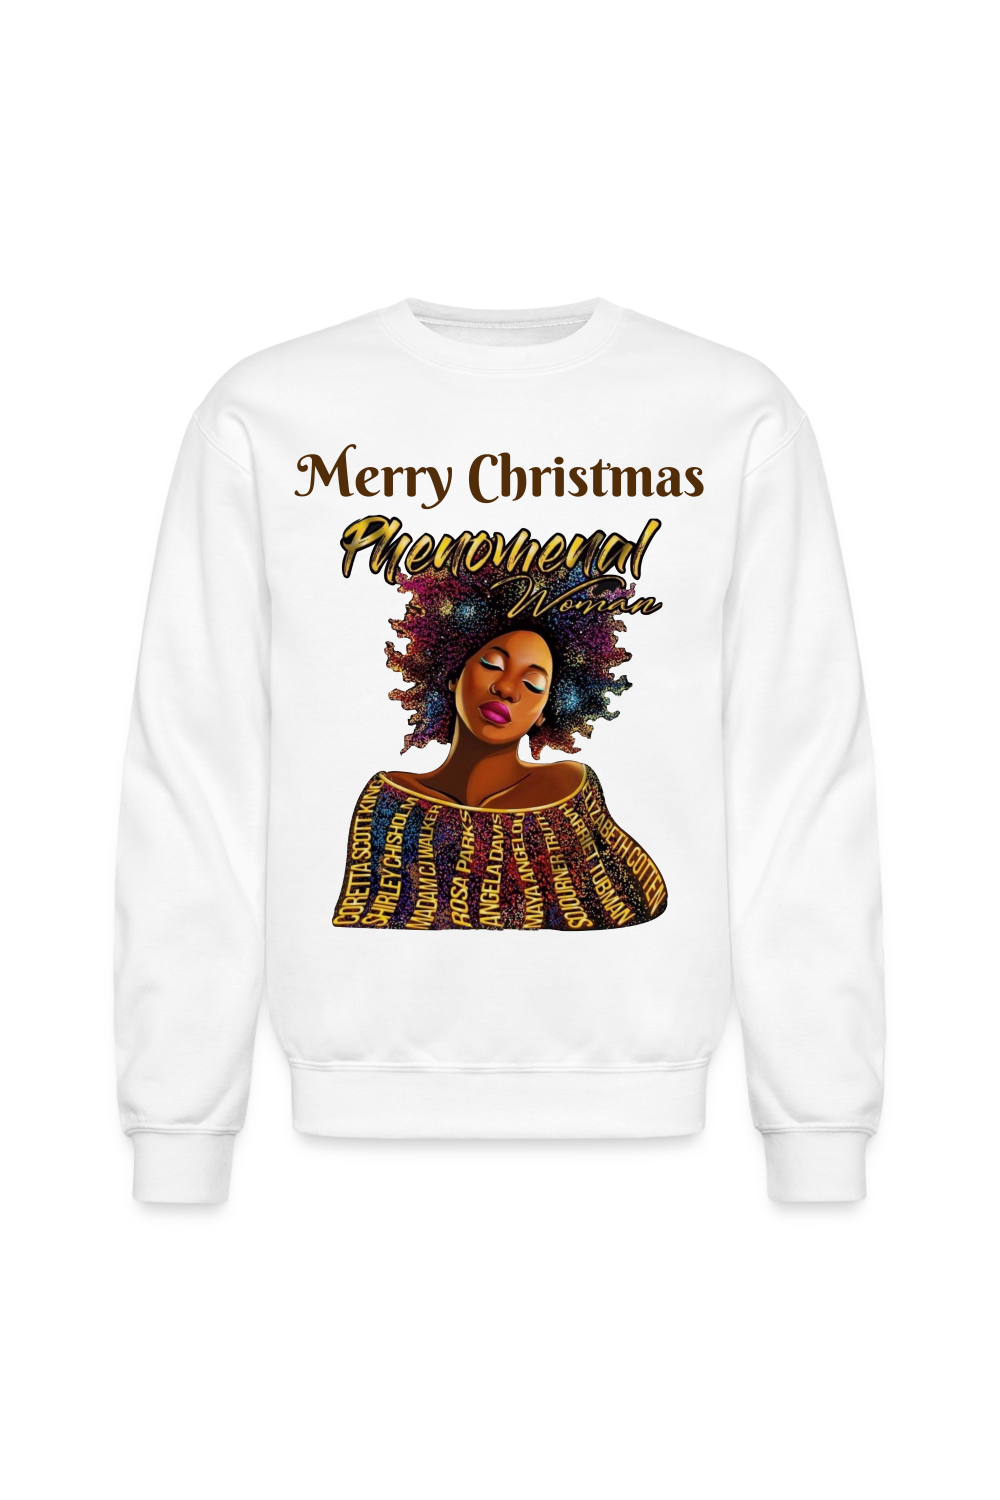 African American Women Phenomenal Woman Christmas Sweatshirt - white - NicholesGifts.online